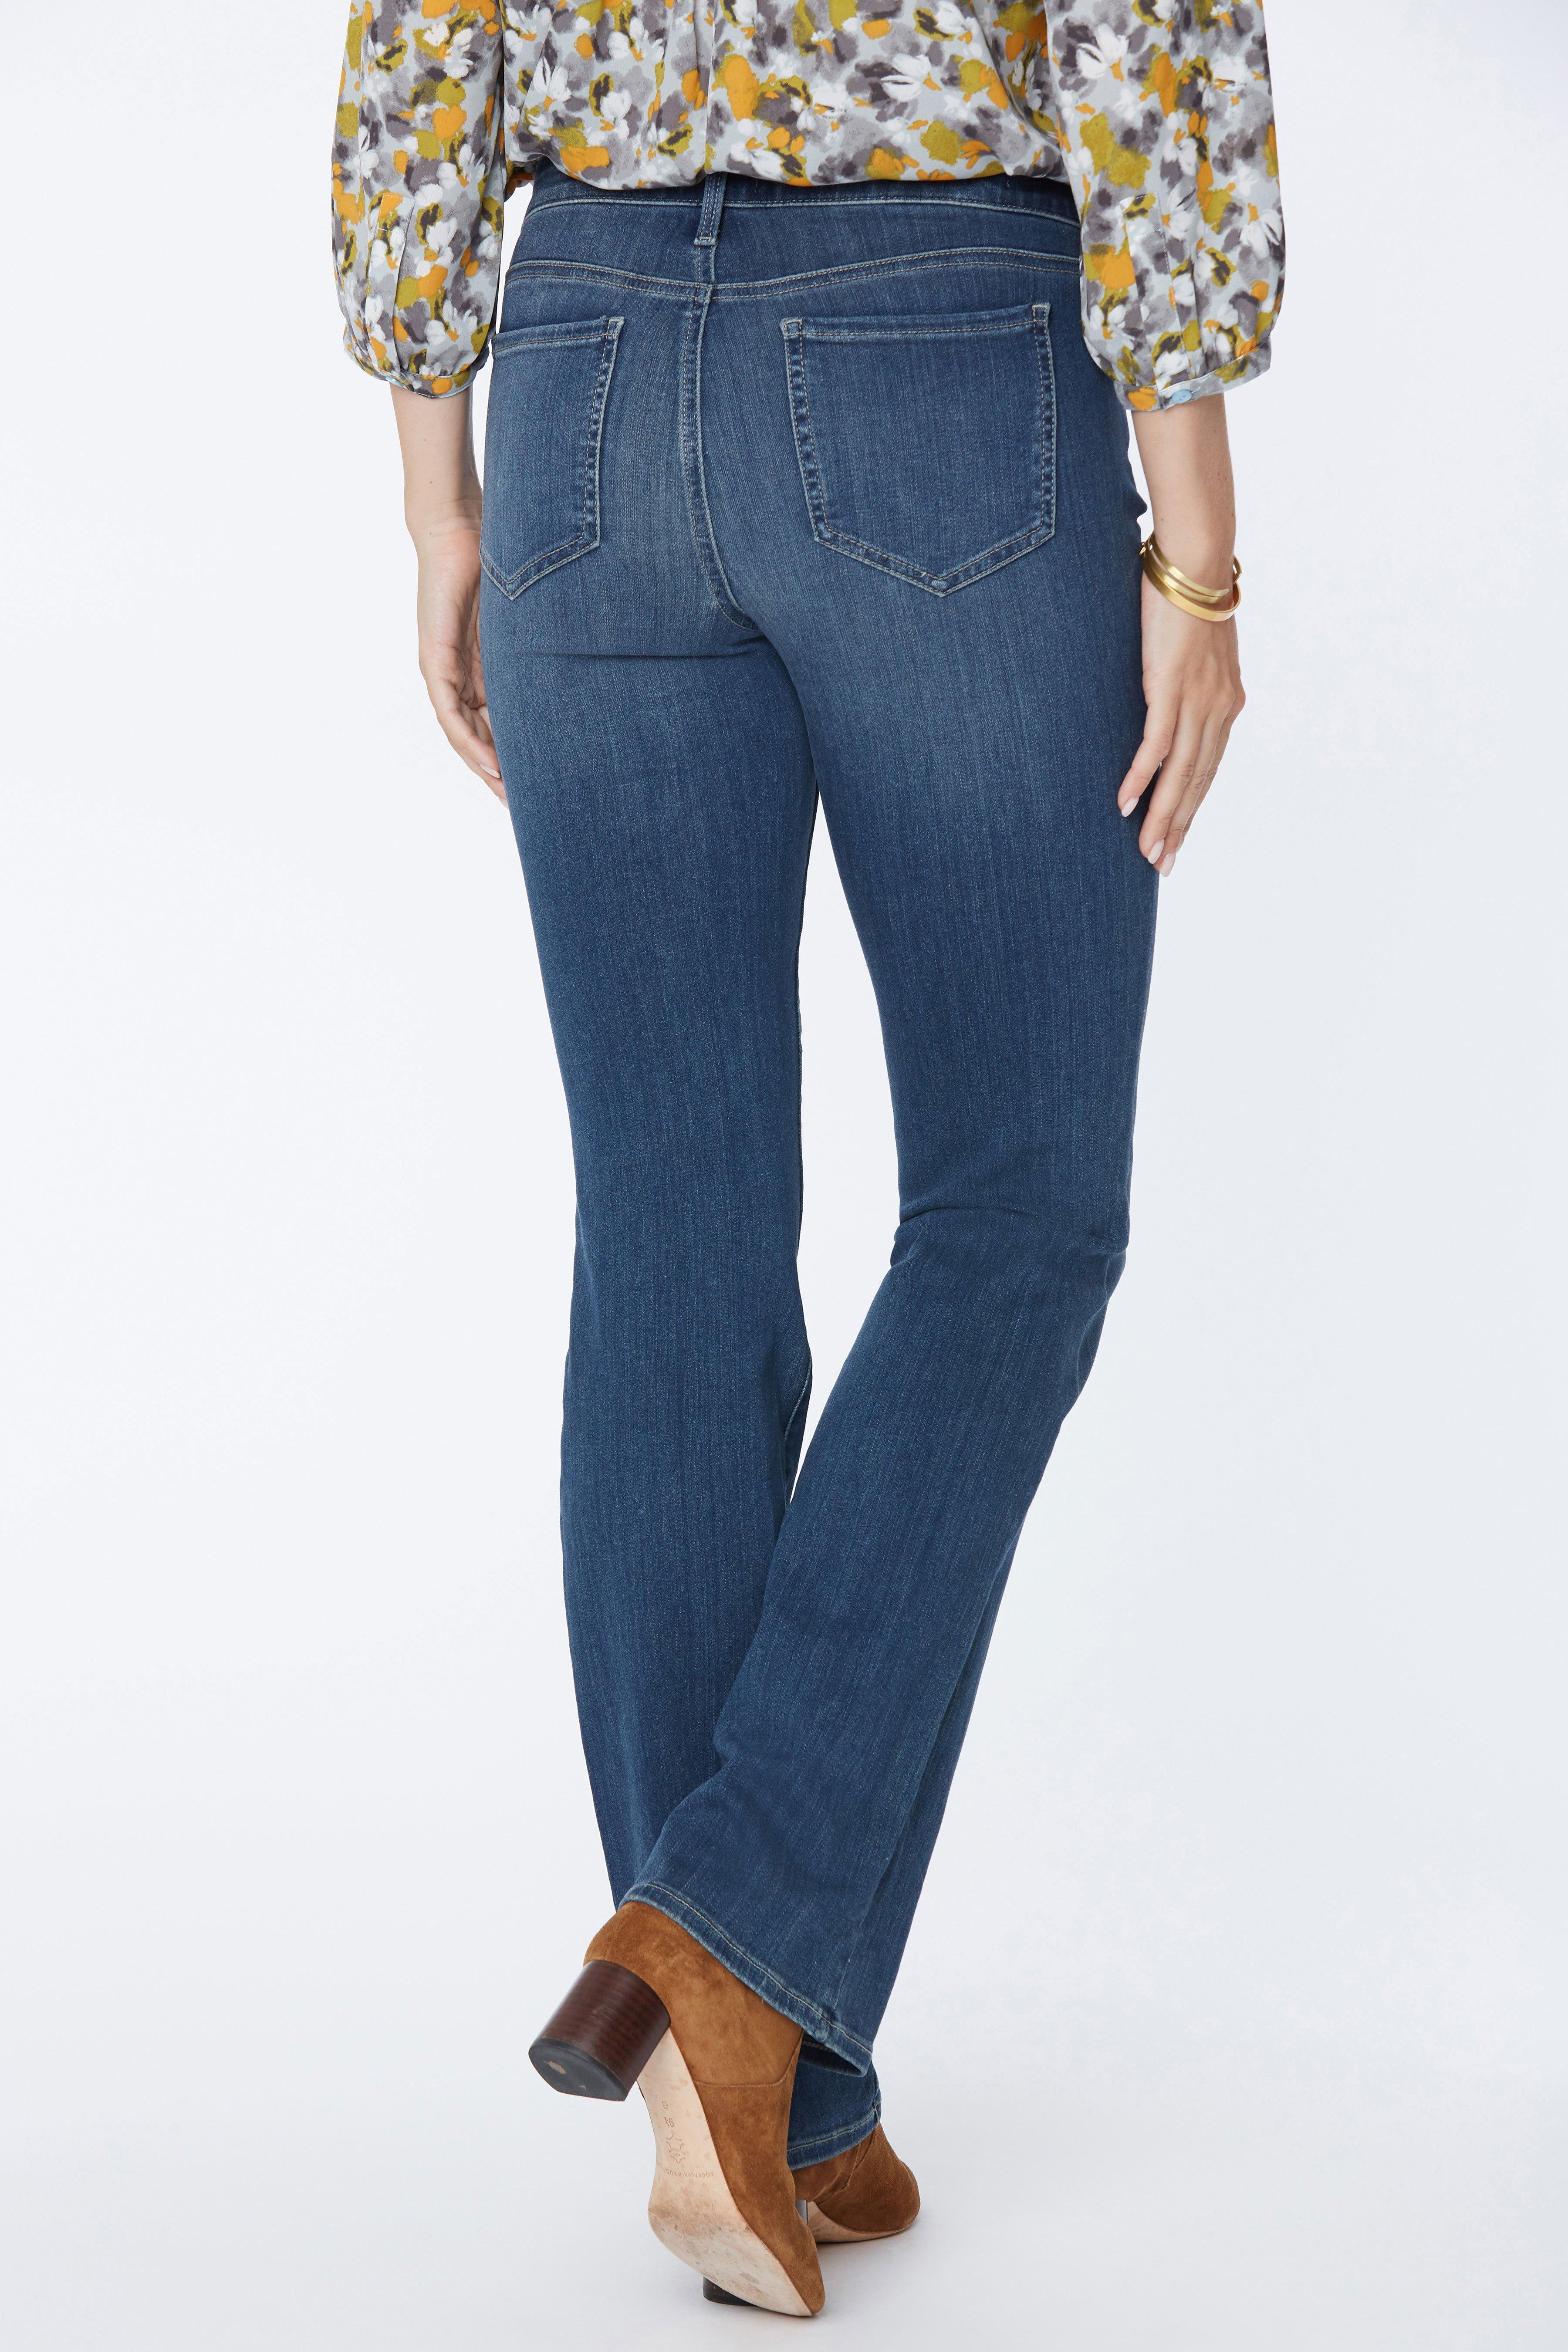 NYDJ Denim Barbara Bootcut Jeans in Blue - Lyst